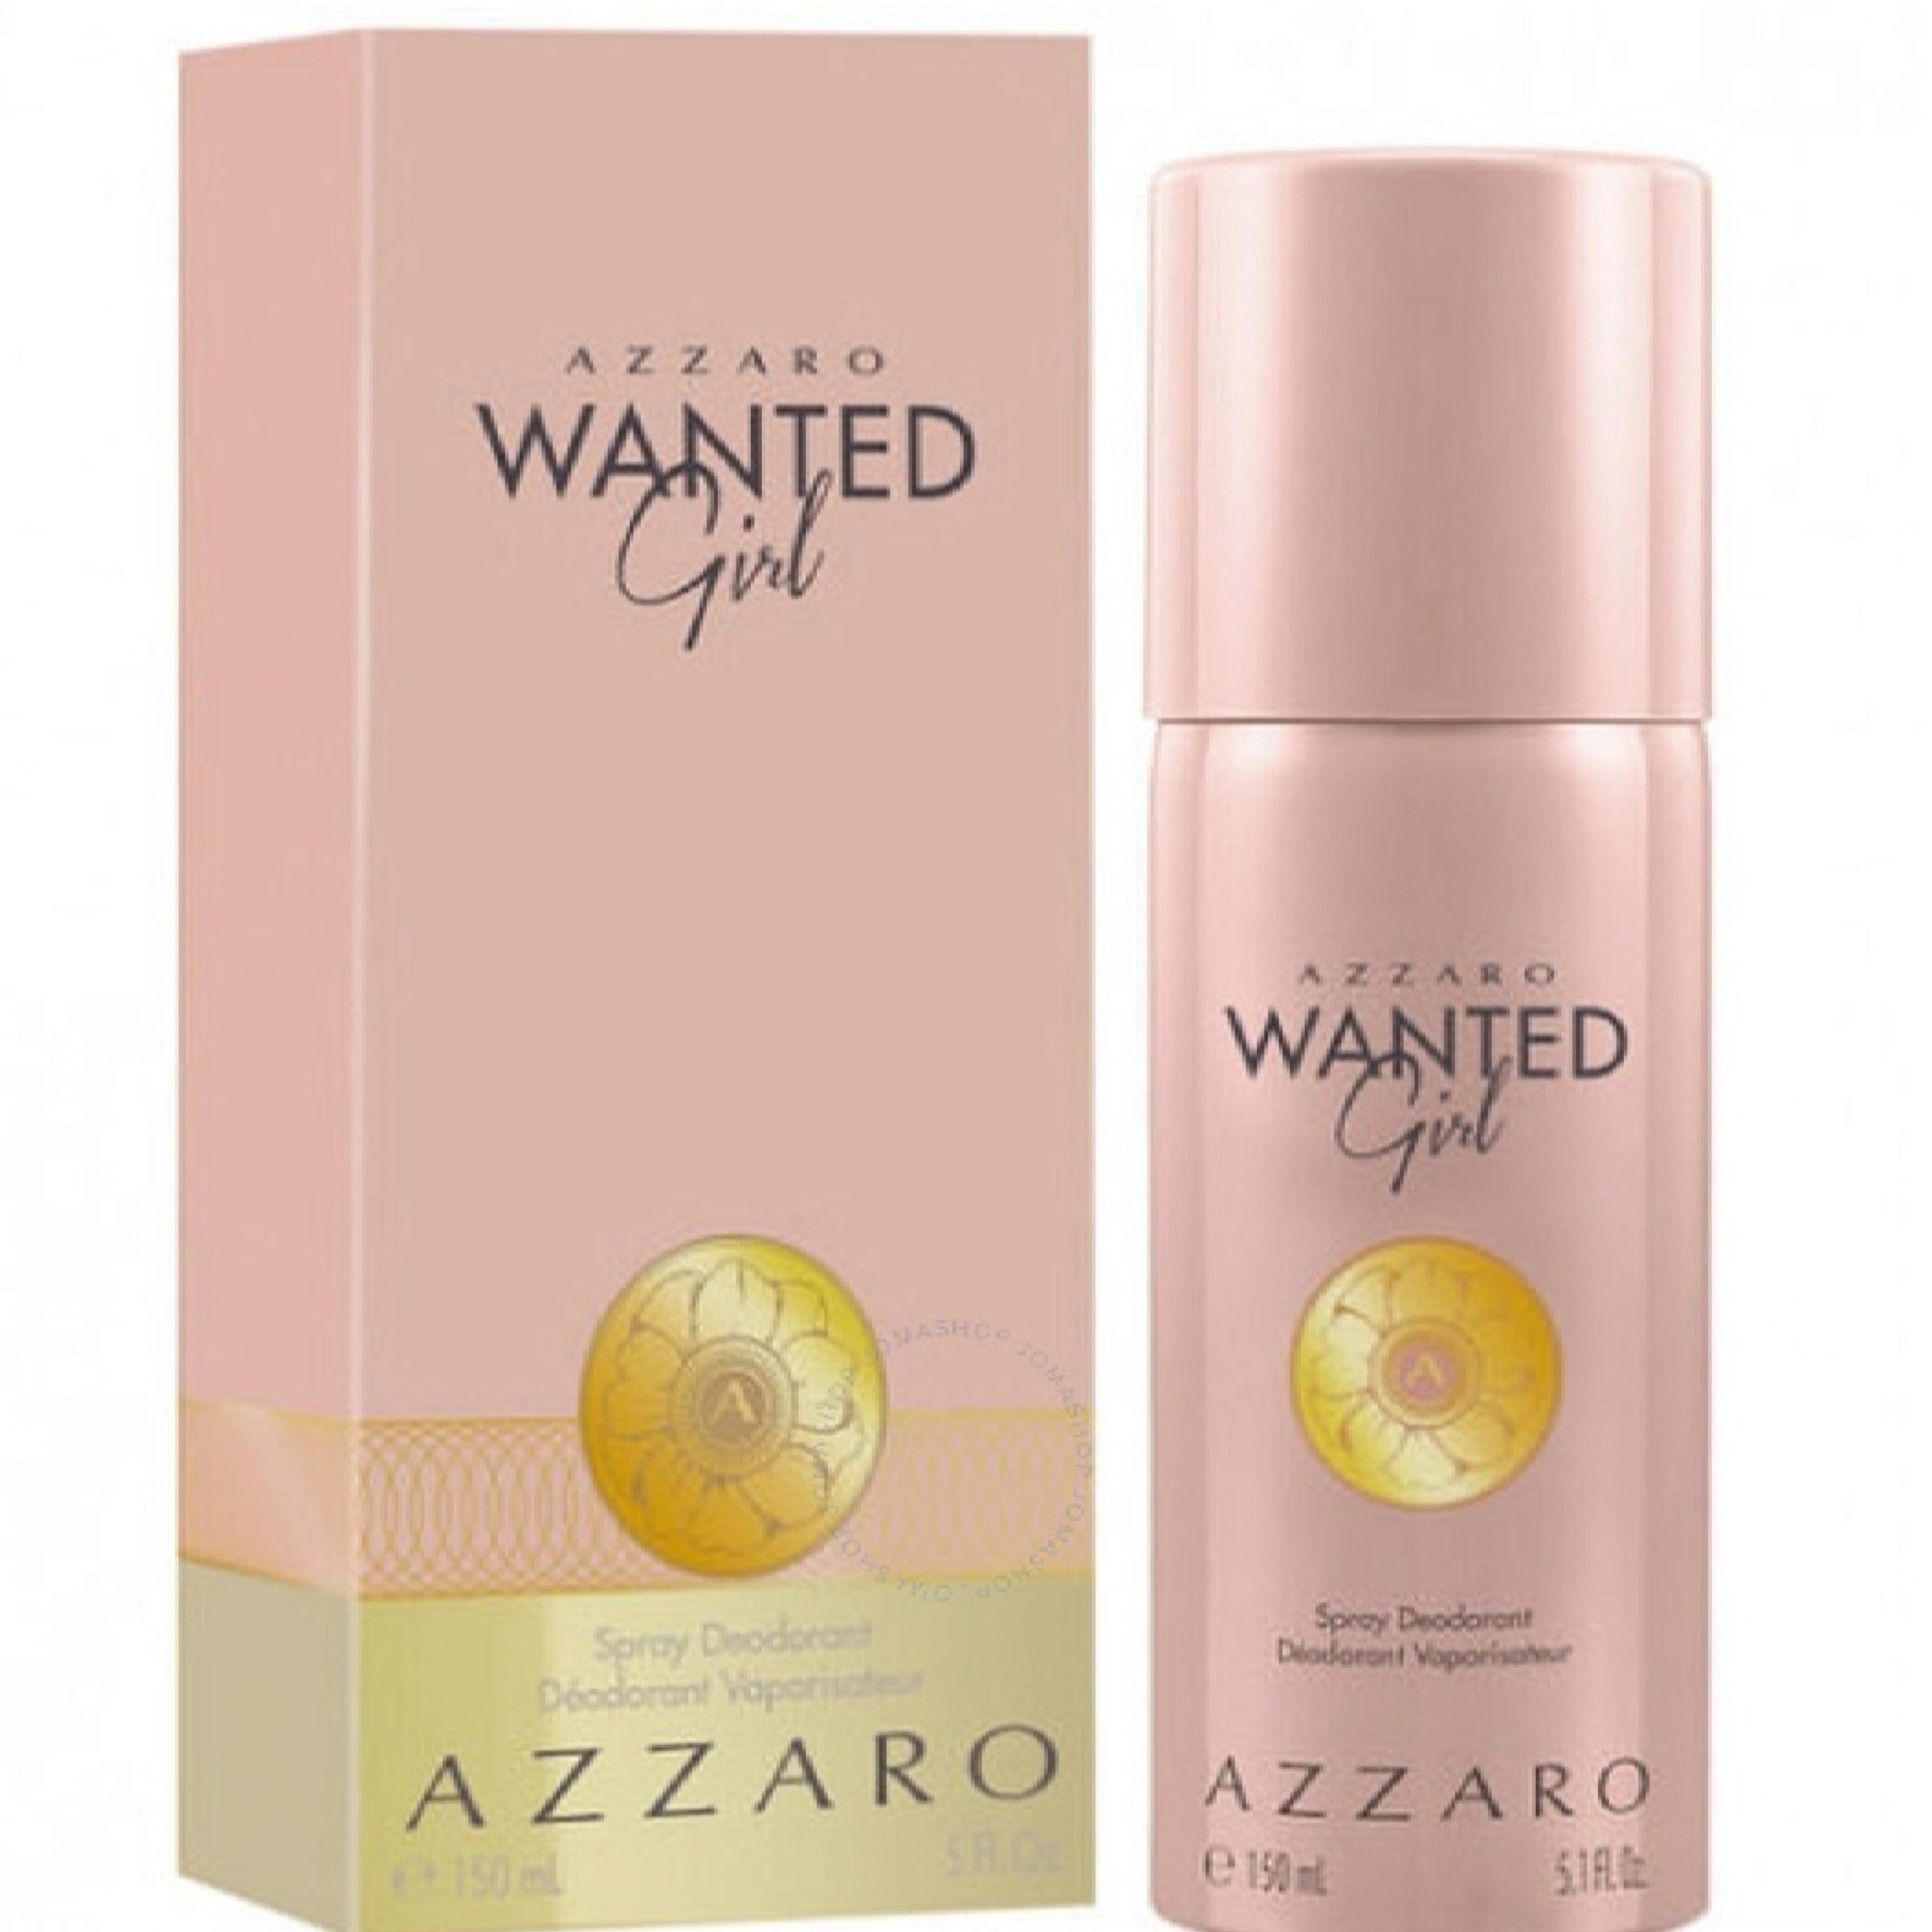 Azzaro Wanted Girl Deodorant Spray | My Perfume Shop Australia